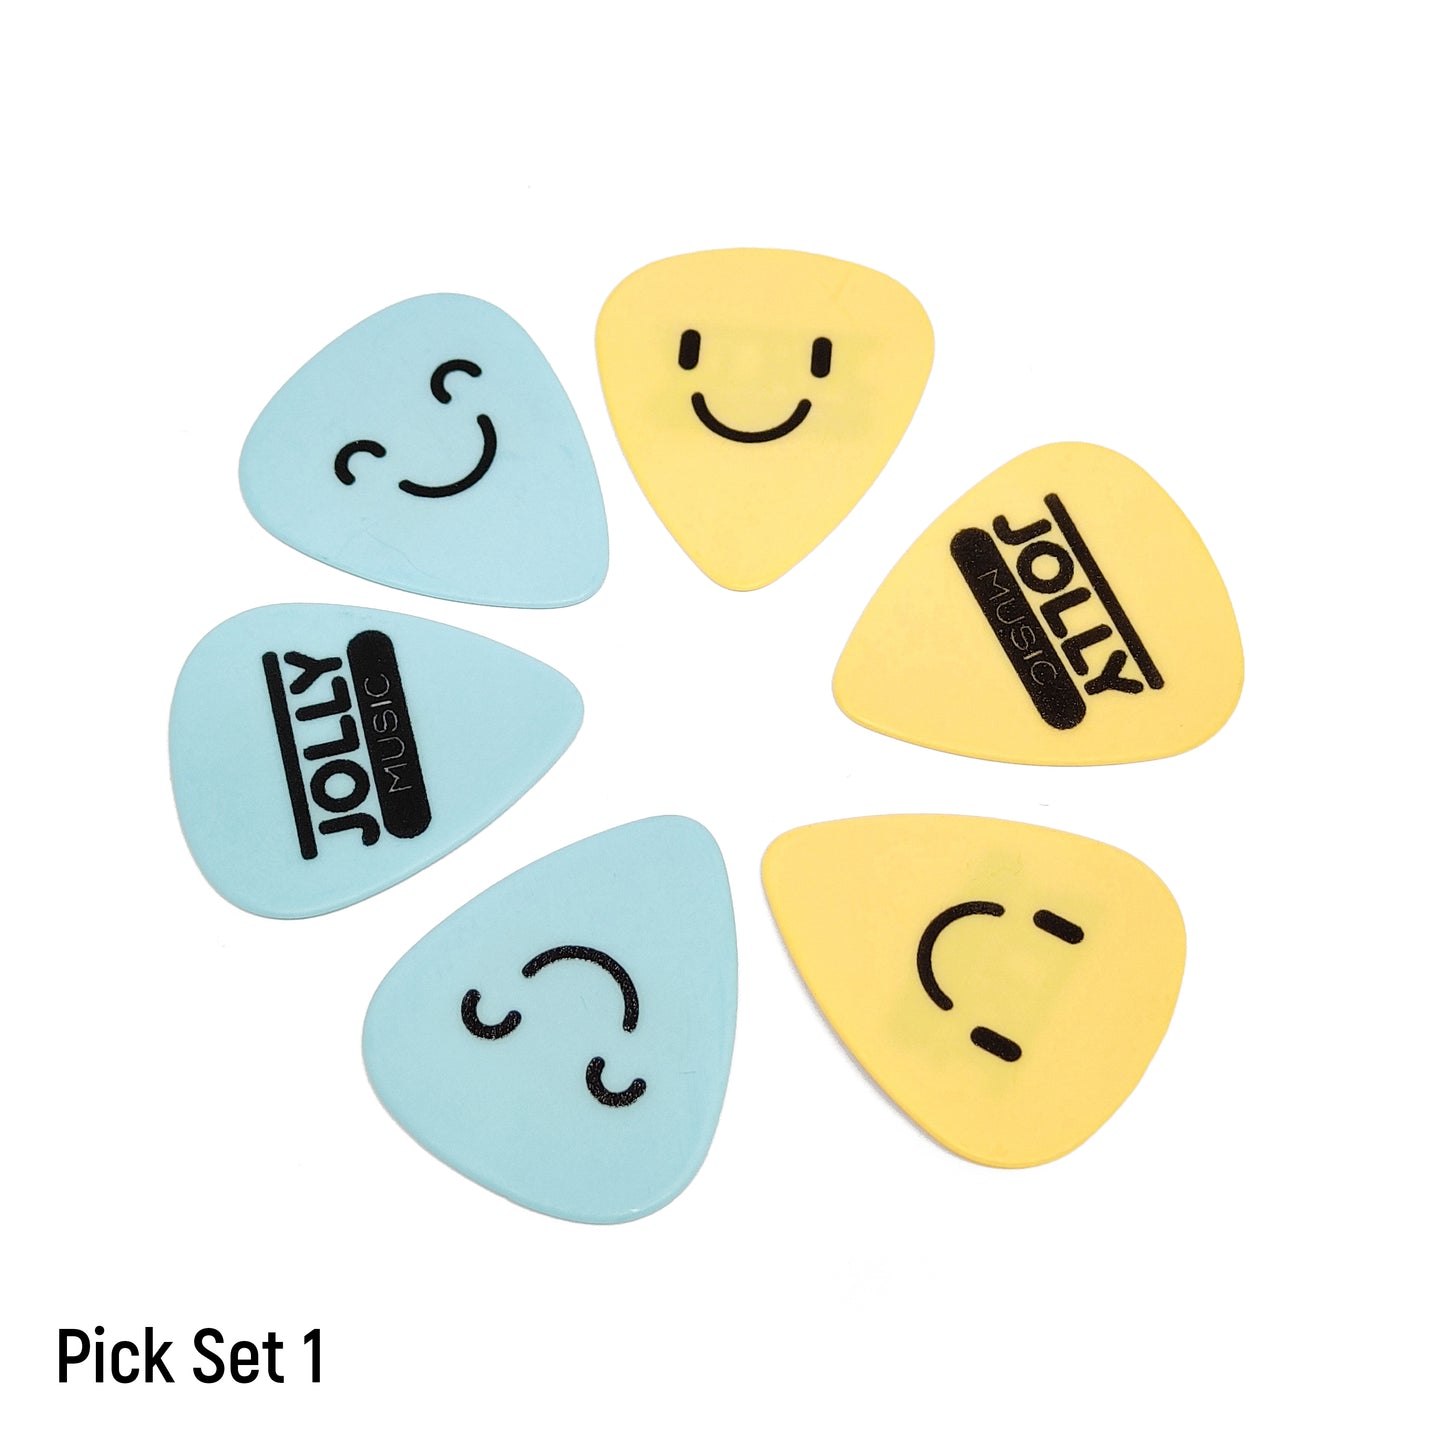 Jolly Music Guitar Pick 6 pc Set - Rhythm, Lead, Djent Pick